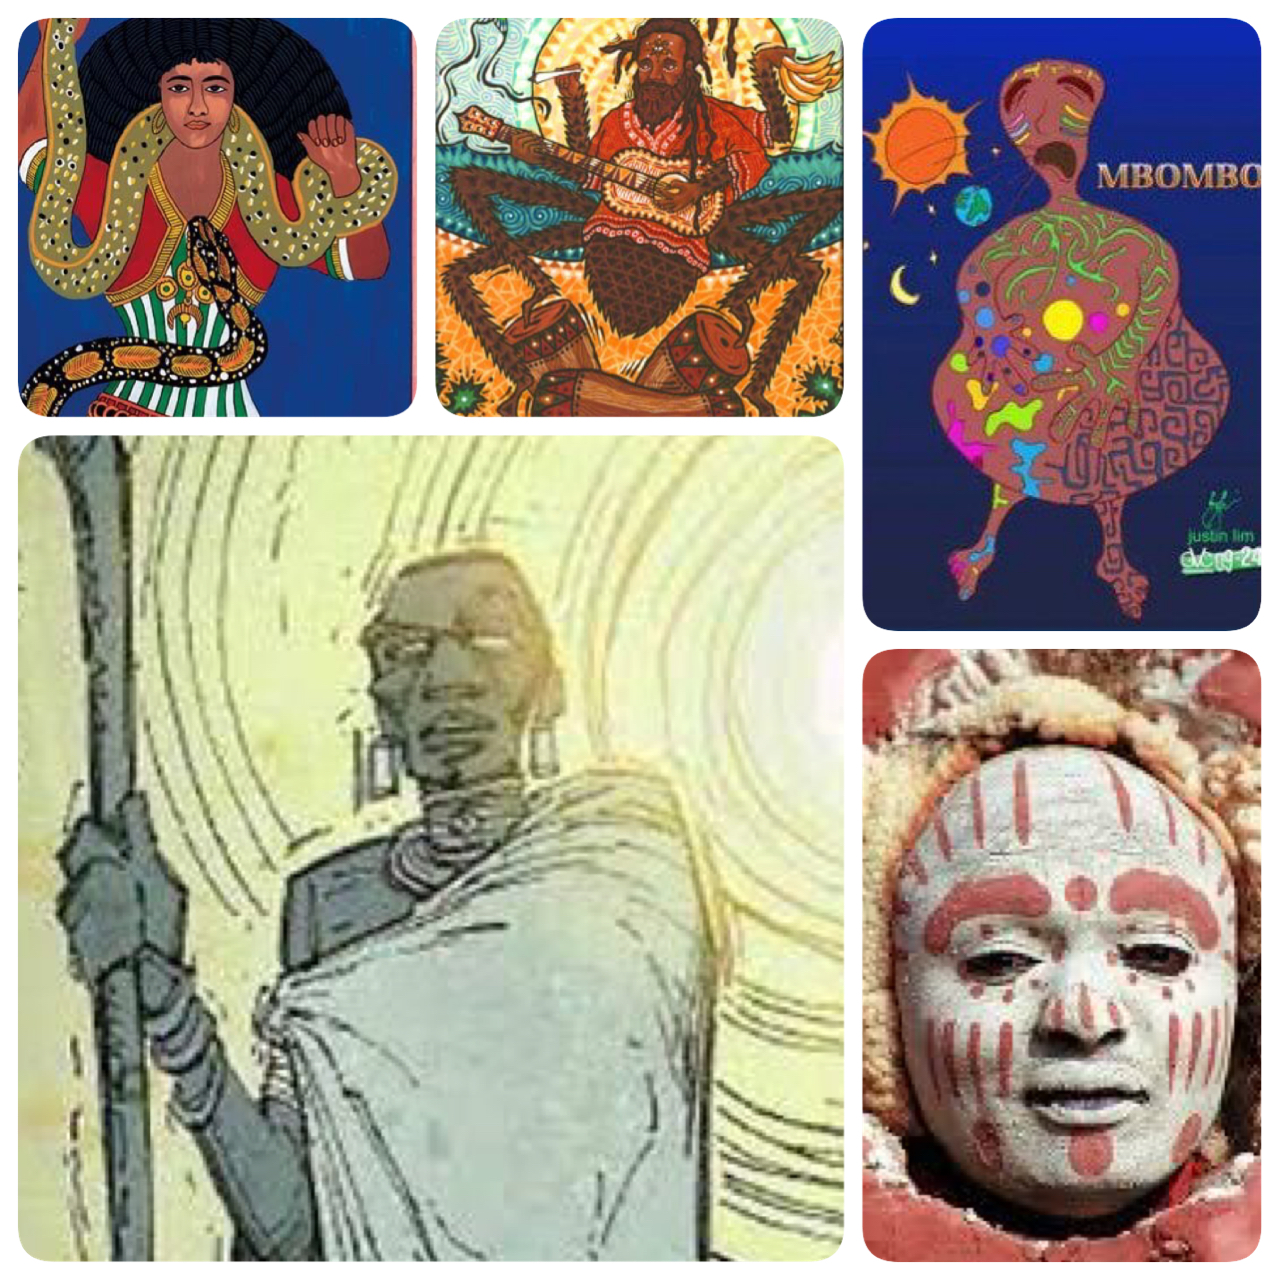 Top 5 enchanting mythological figures across Africa